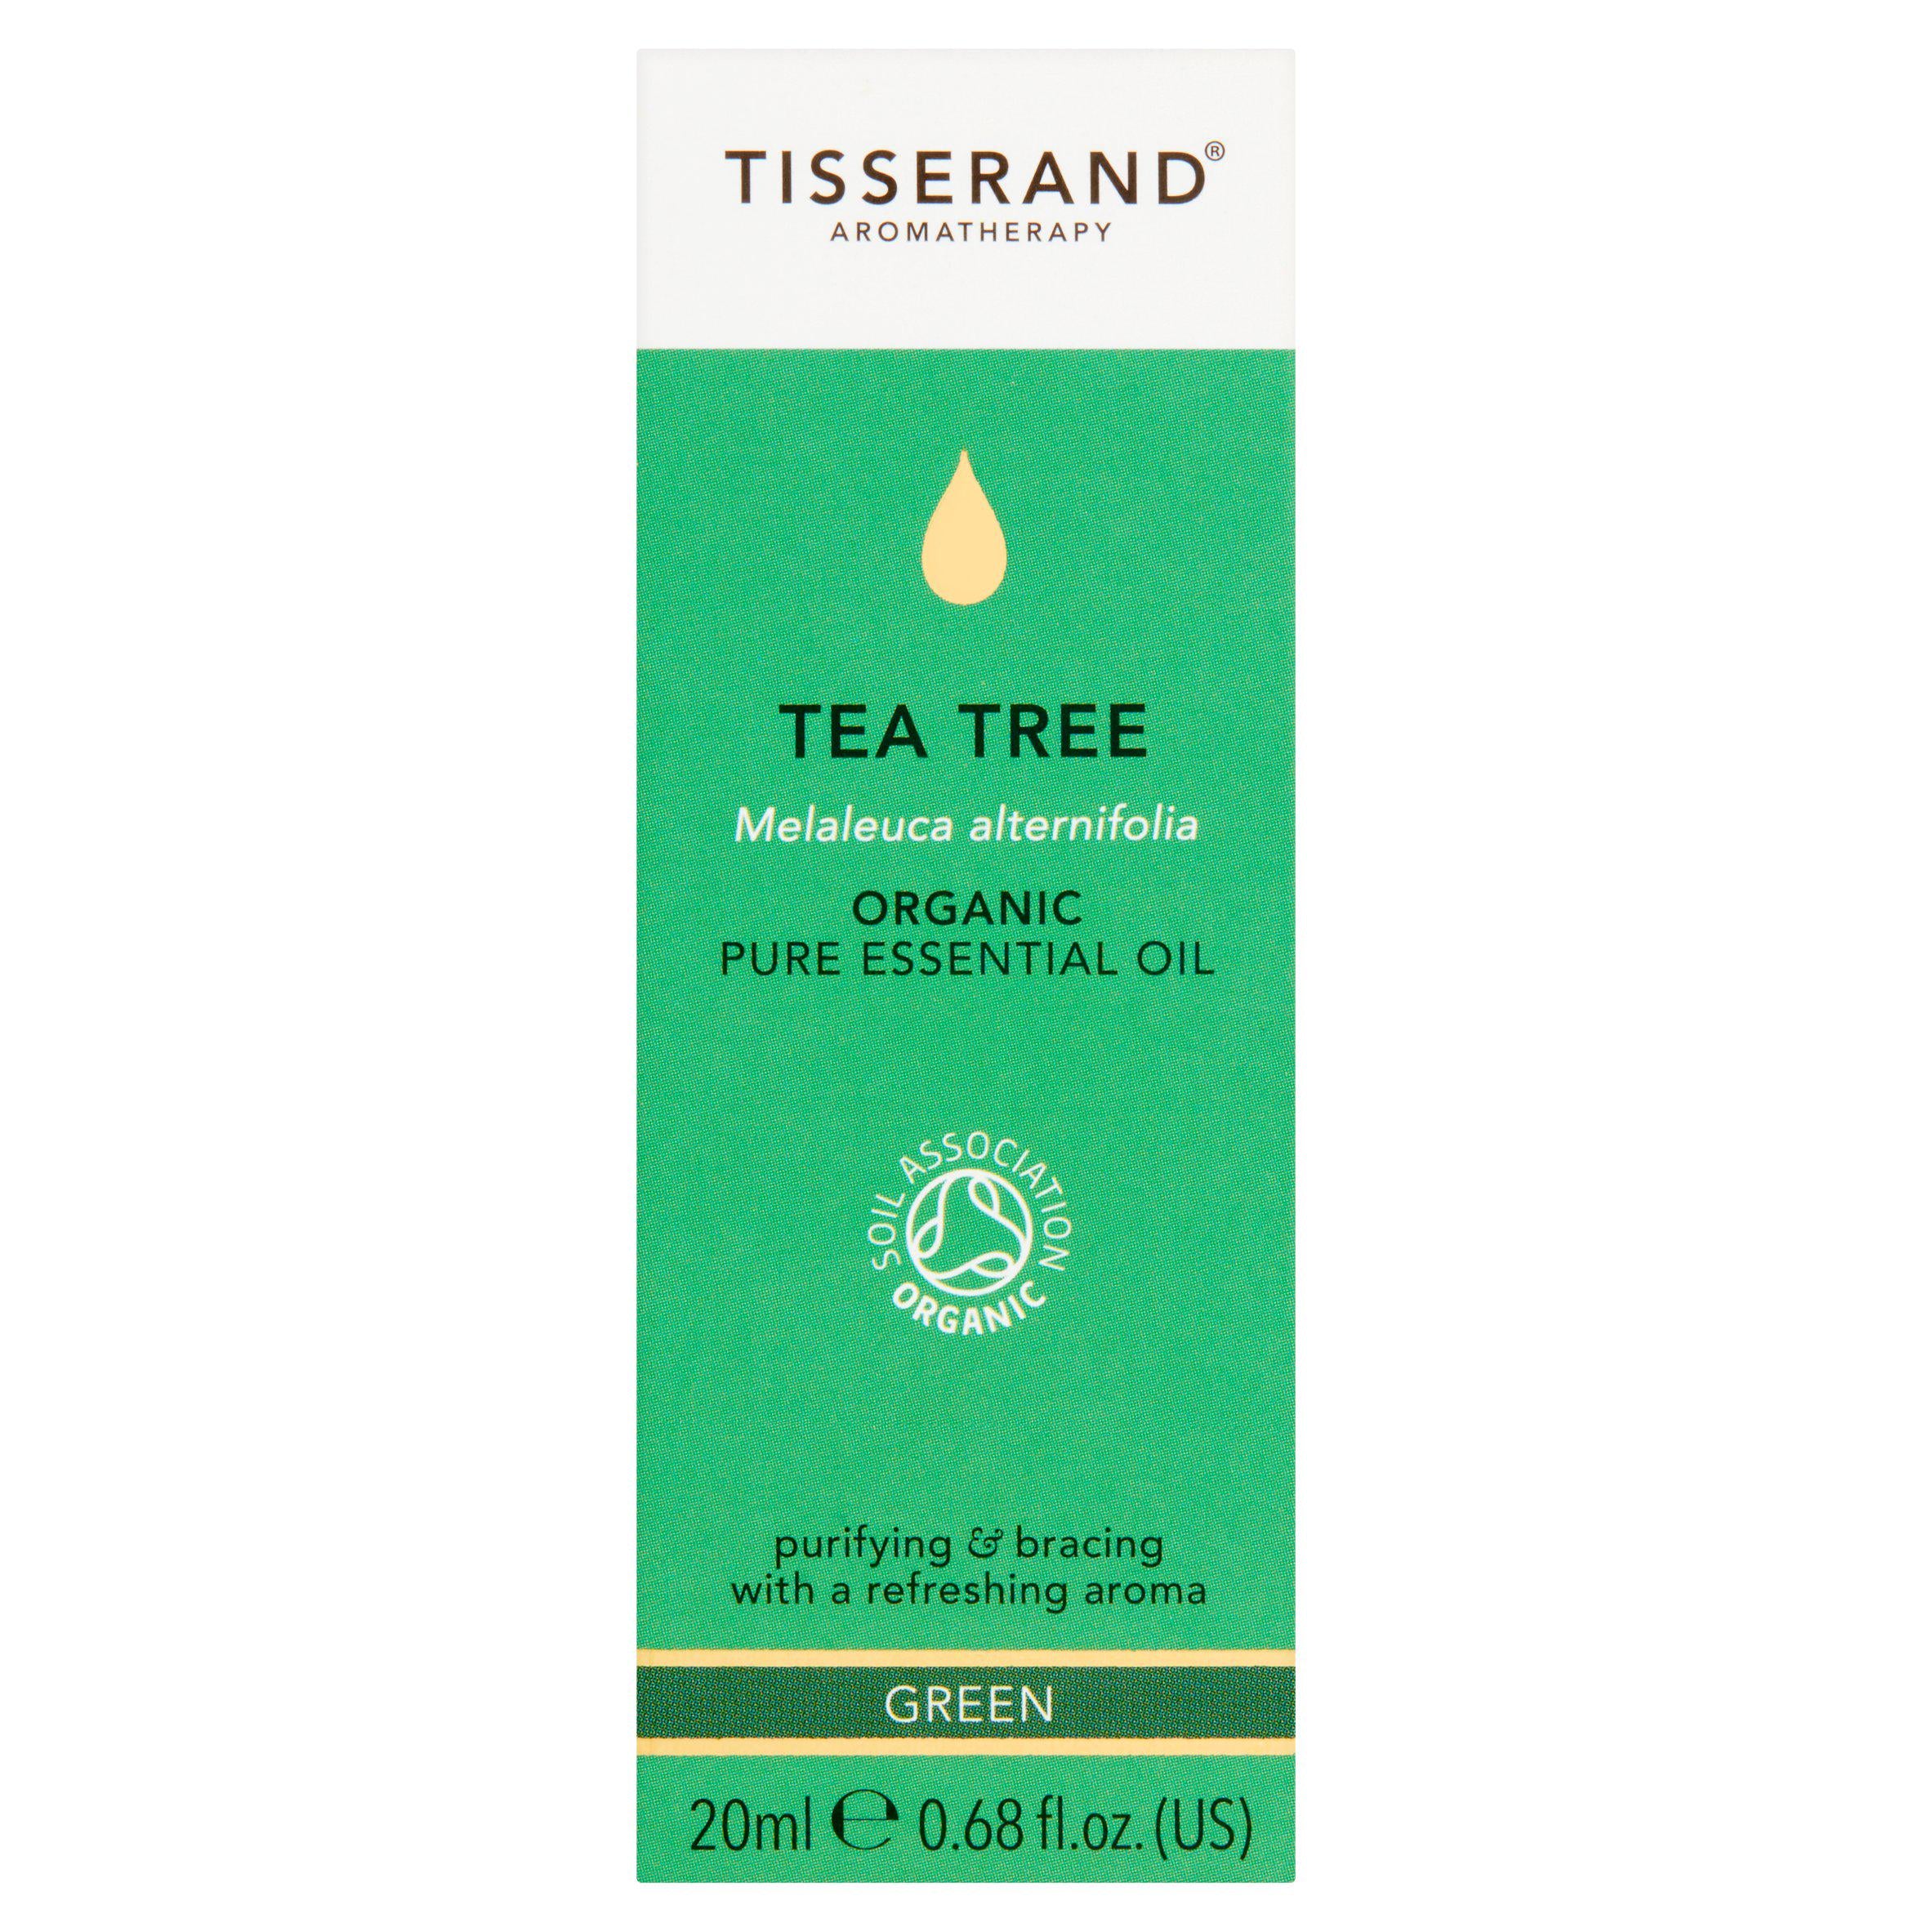 Tisserand Aromatherapy Green Tea Tree Organic Pure Essential Oil 20ml - McGrocer